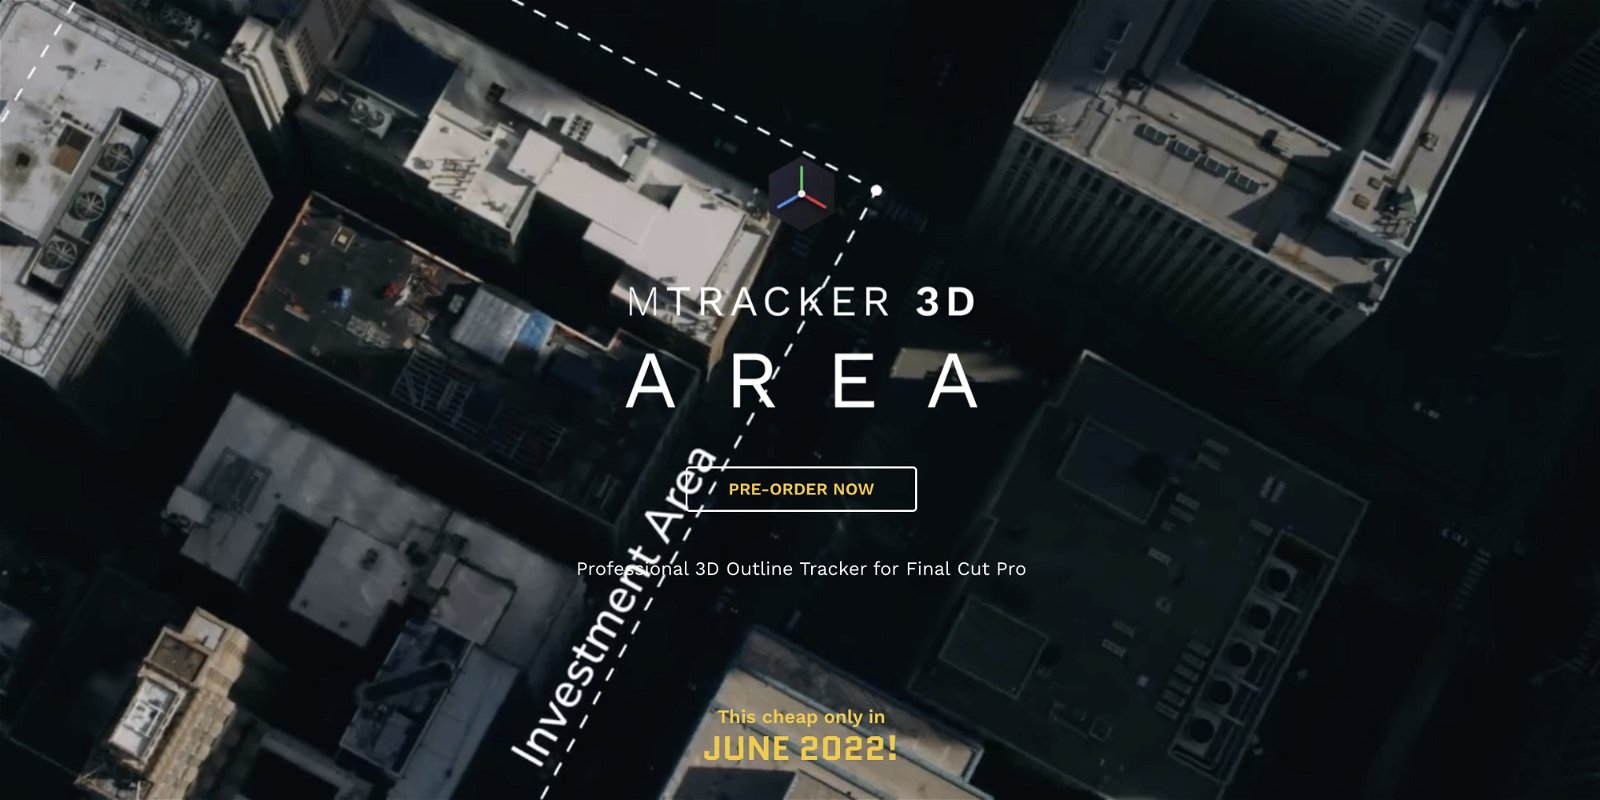 mTracker 3D Area